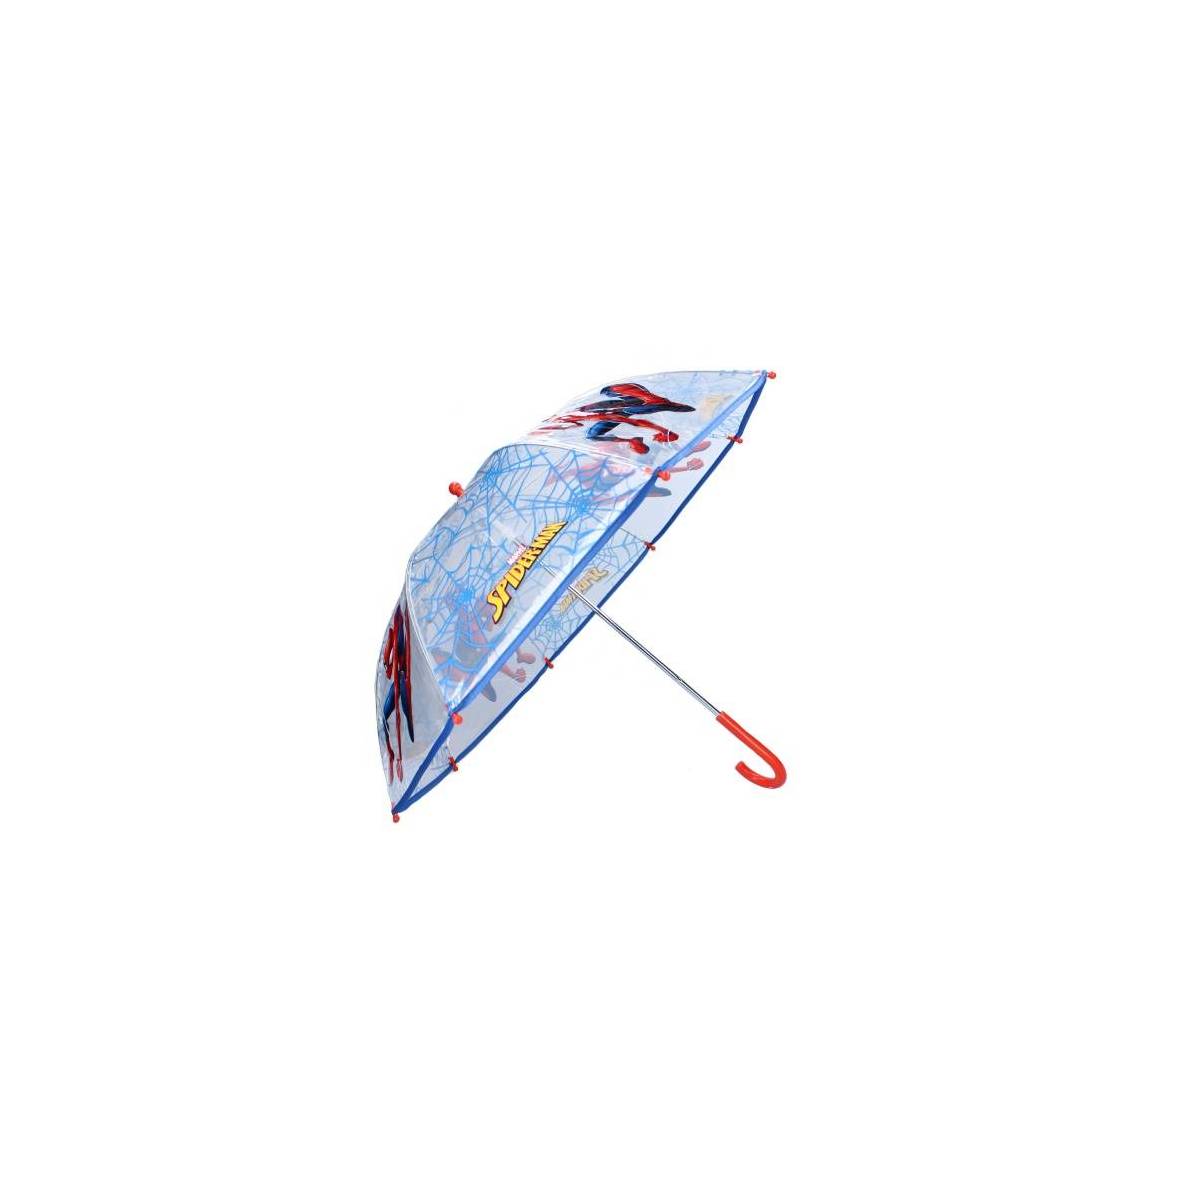 Parapluie Spider-Man Umbrella Party